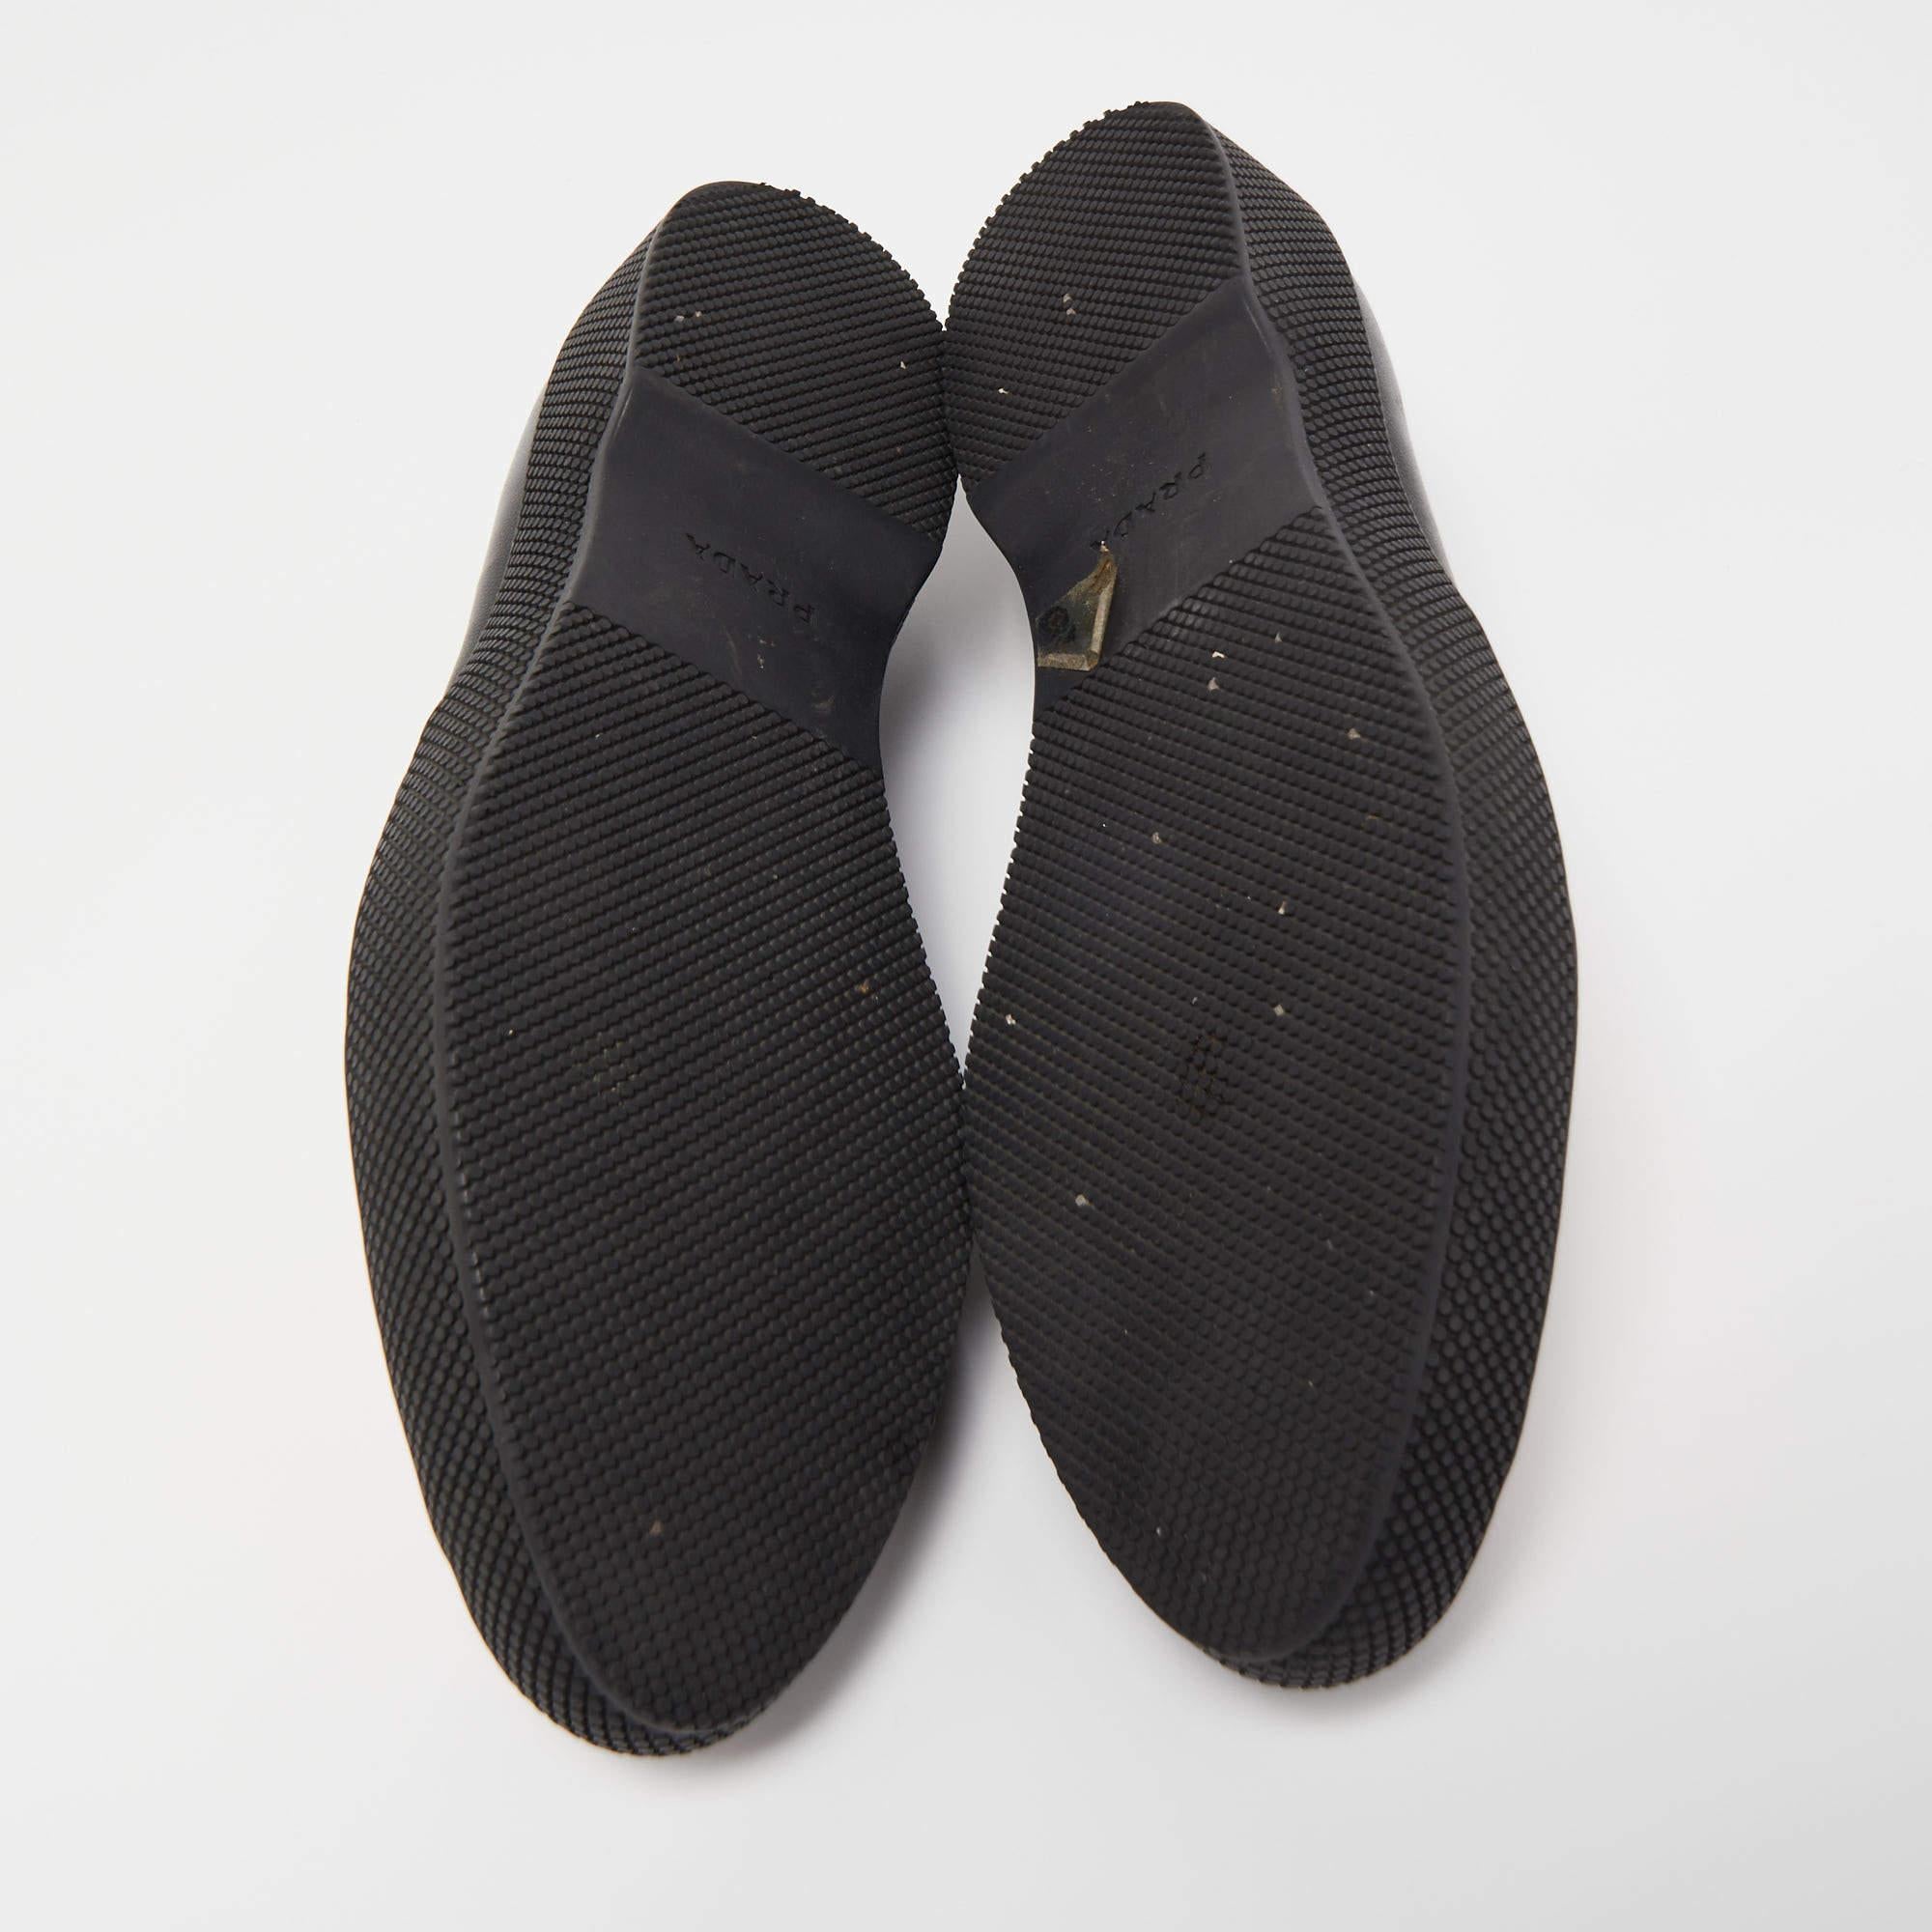 Prada Black Leather Smoking Slippers Size 37.5 2